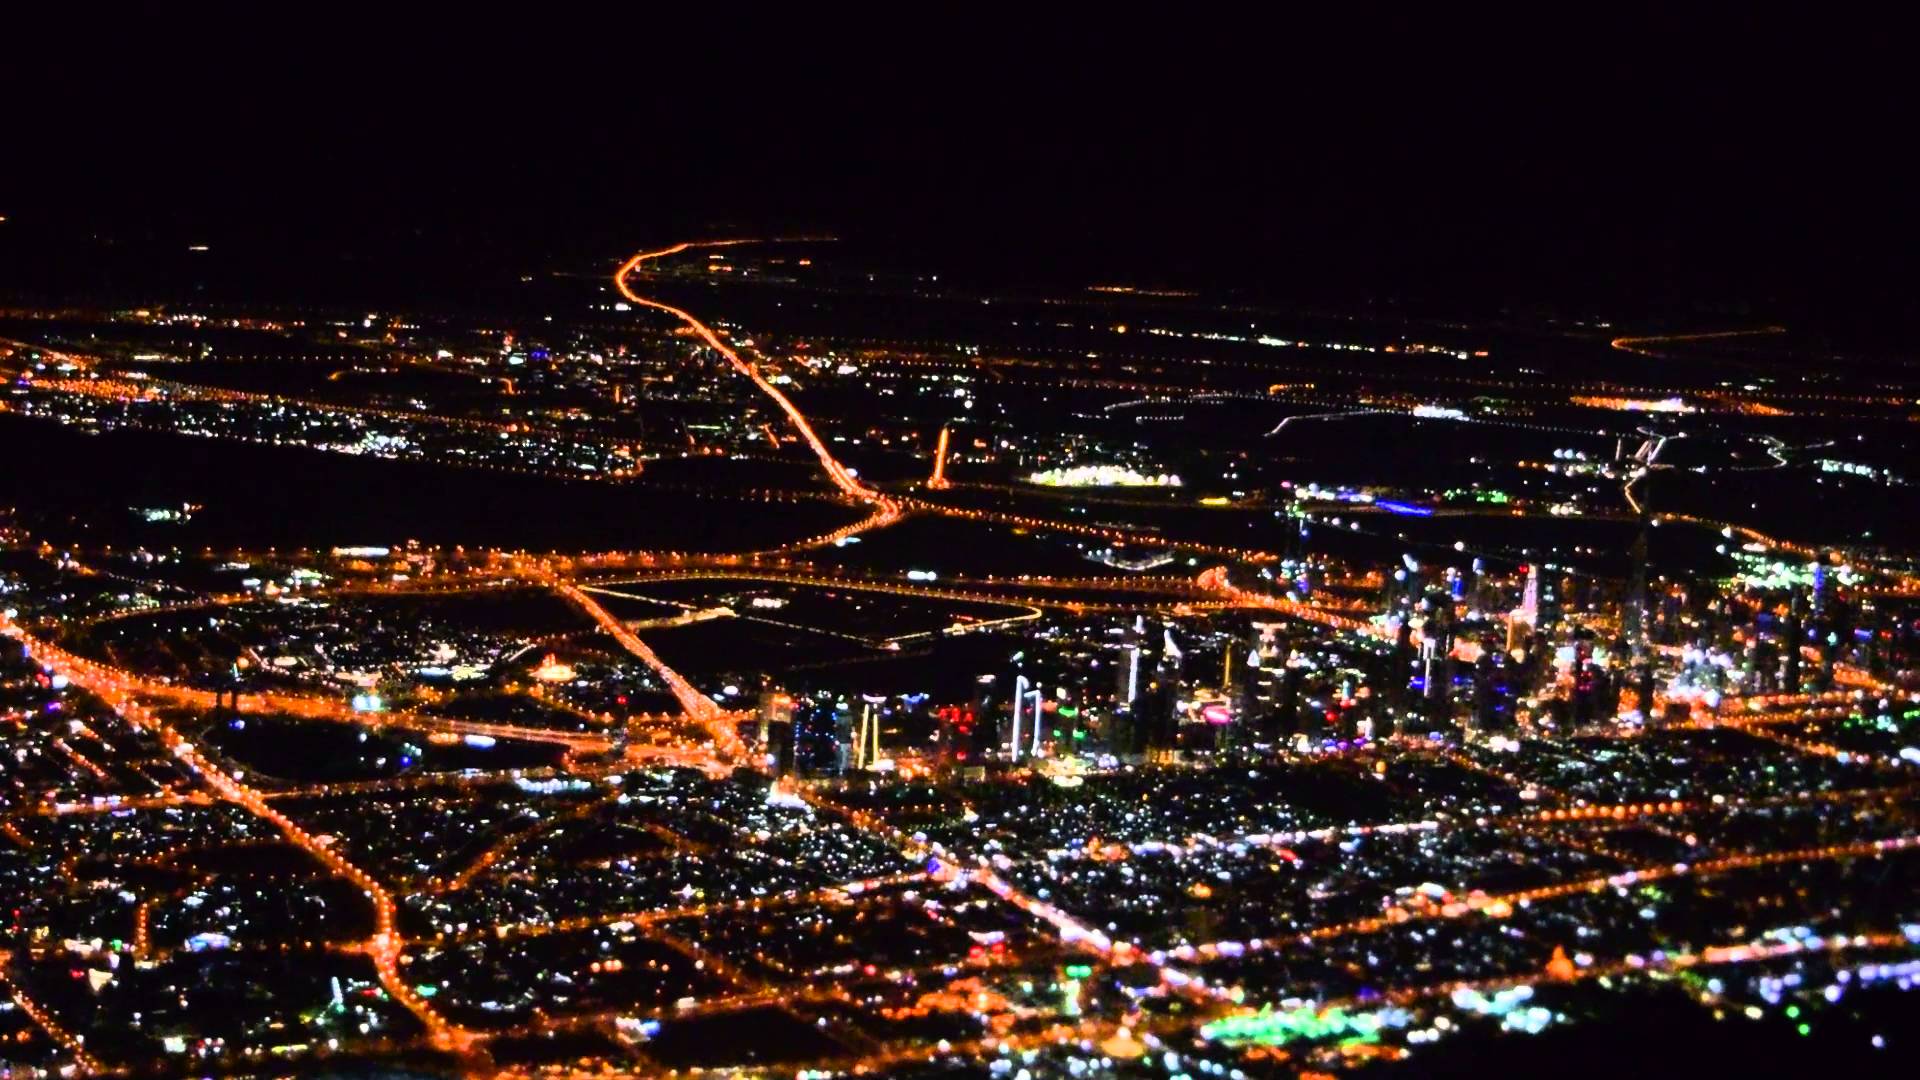 Take off from Dubai International Dubai Airport at night - YouTube